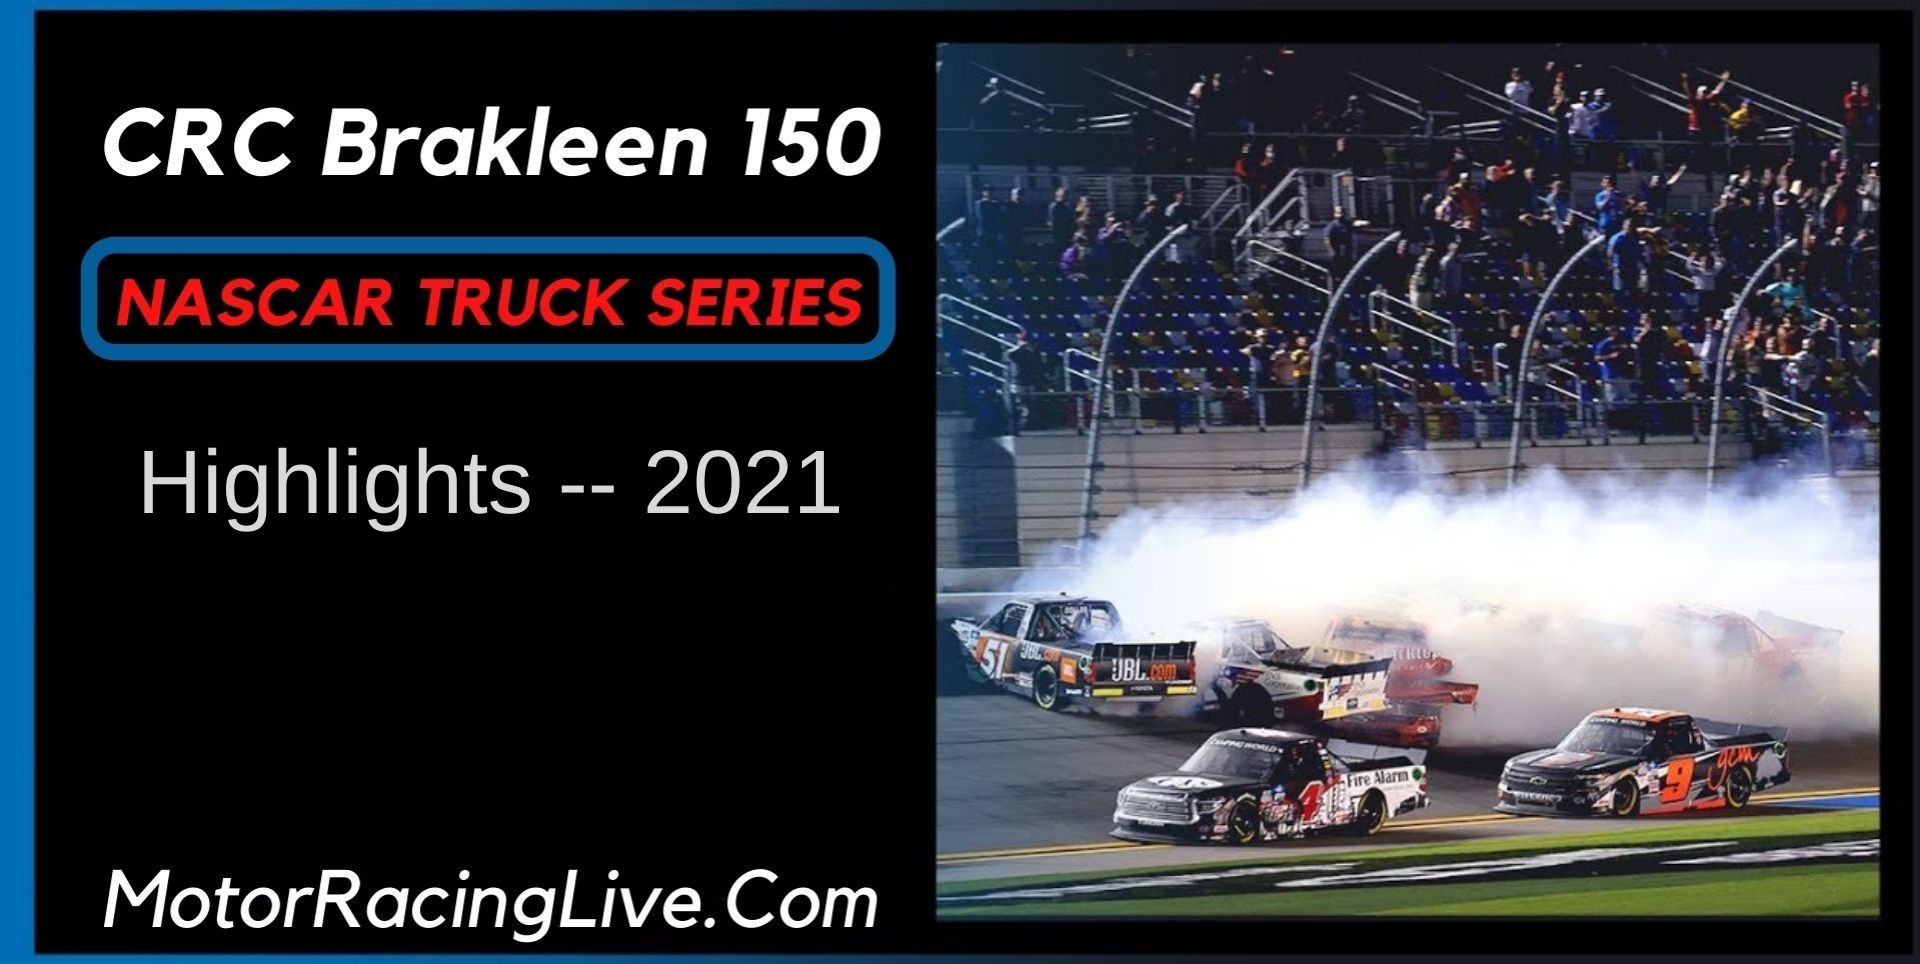 CRC Brakleen 150 Highlights 2021 NASCAR Truck Series